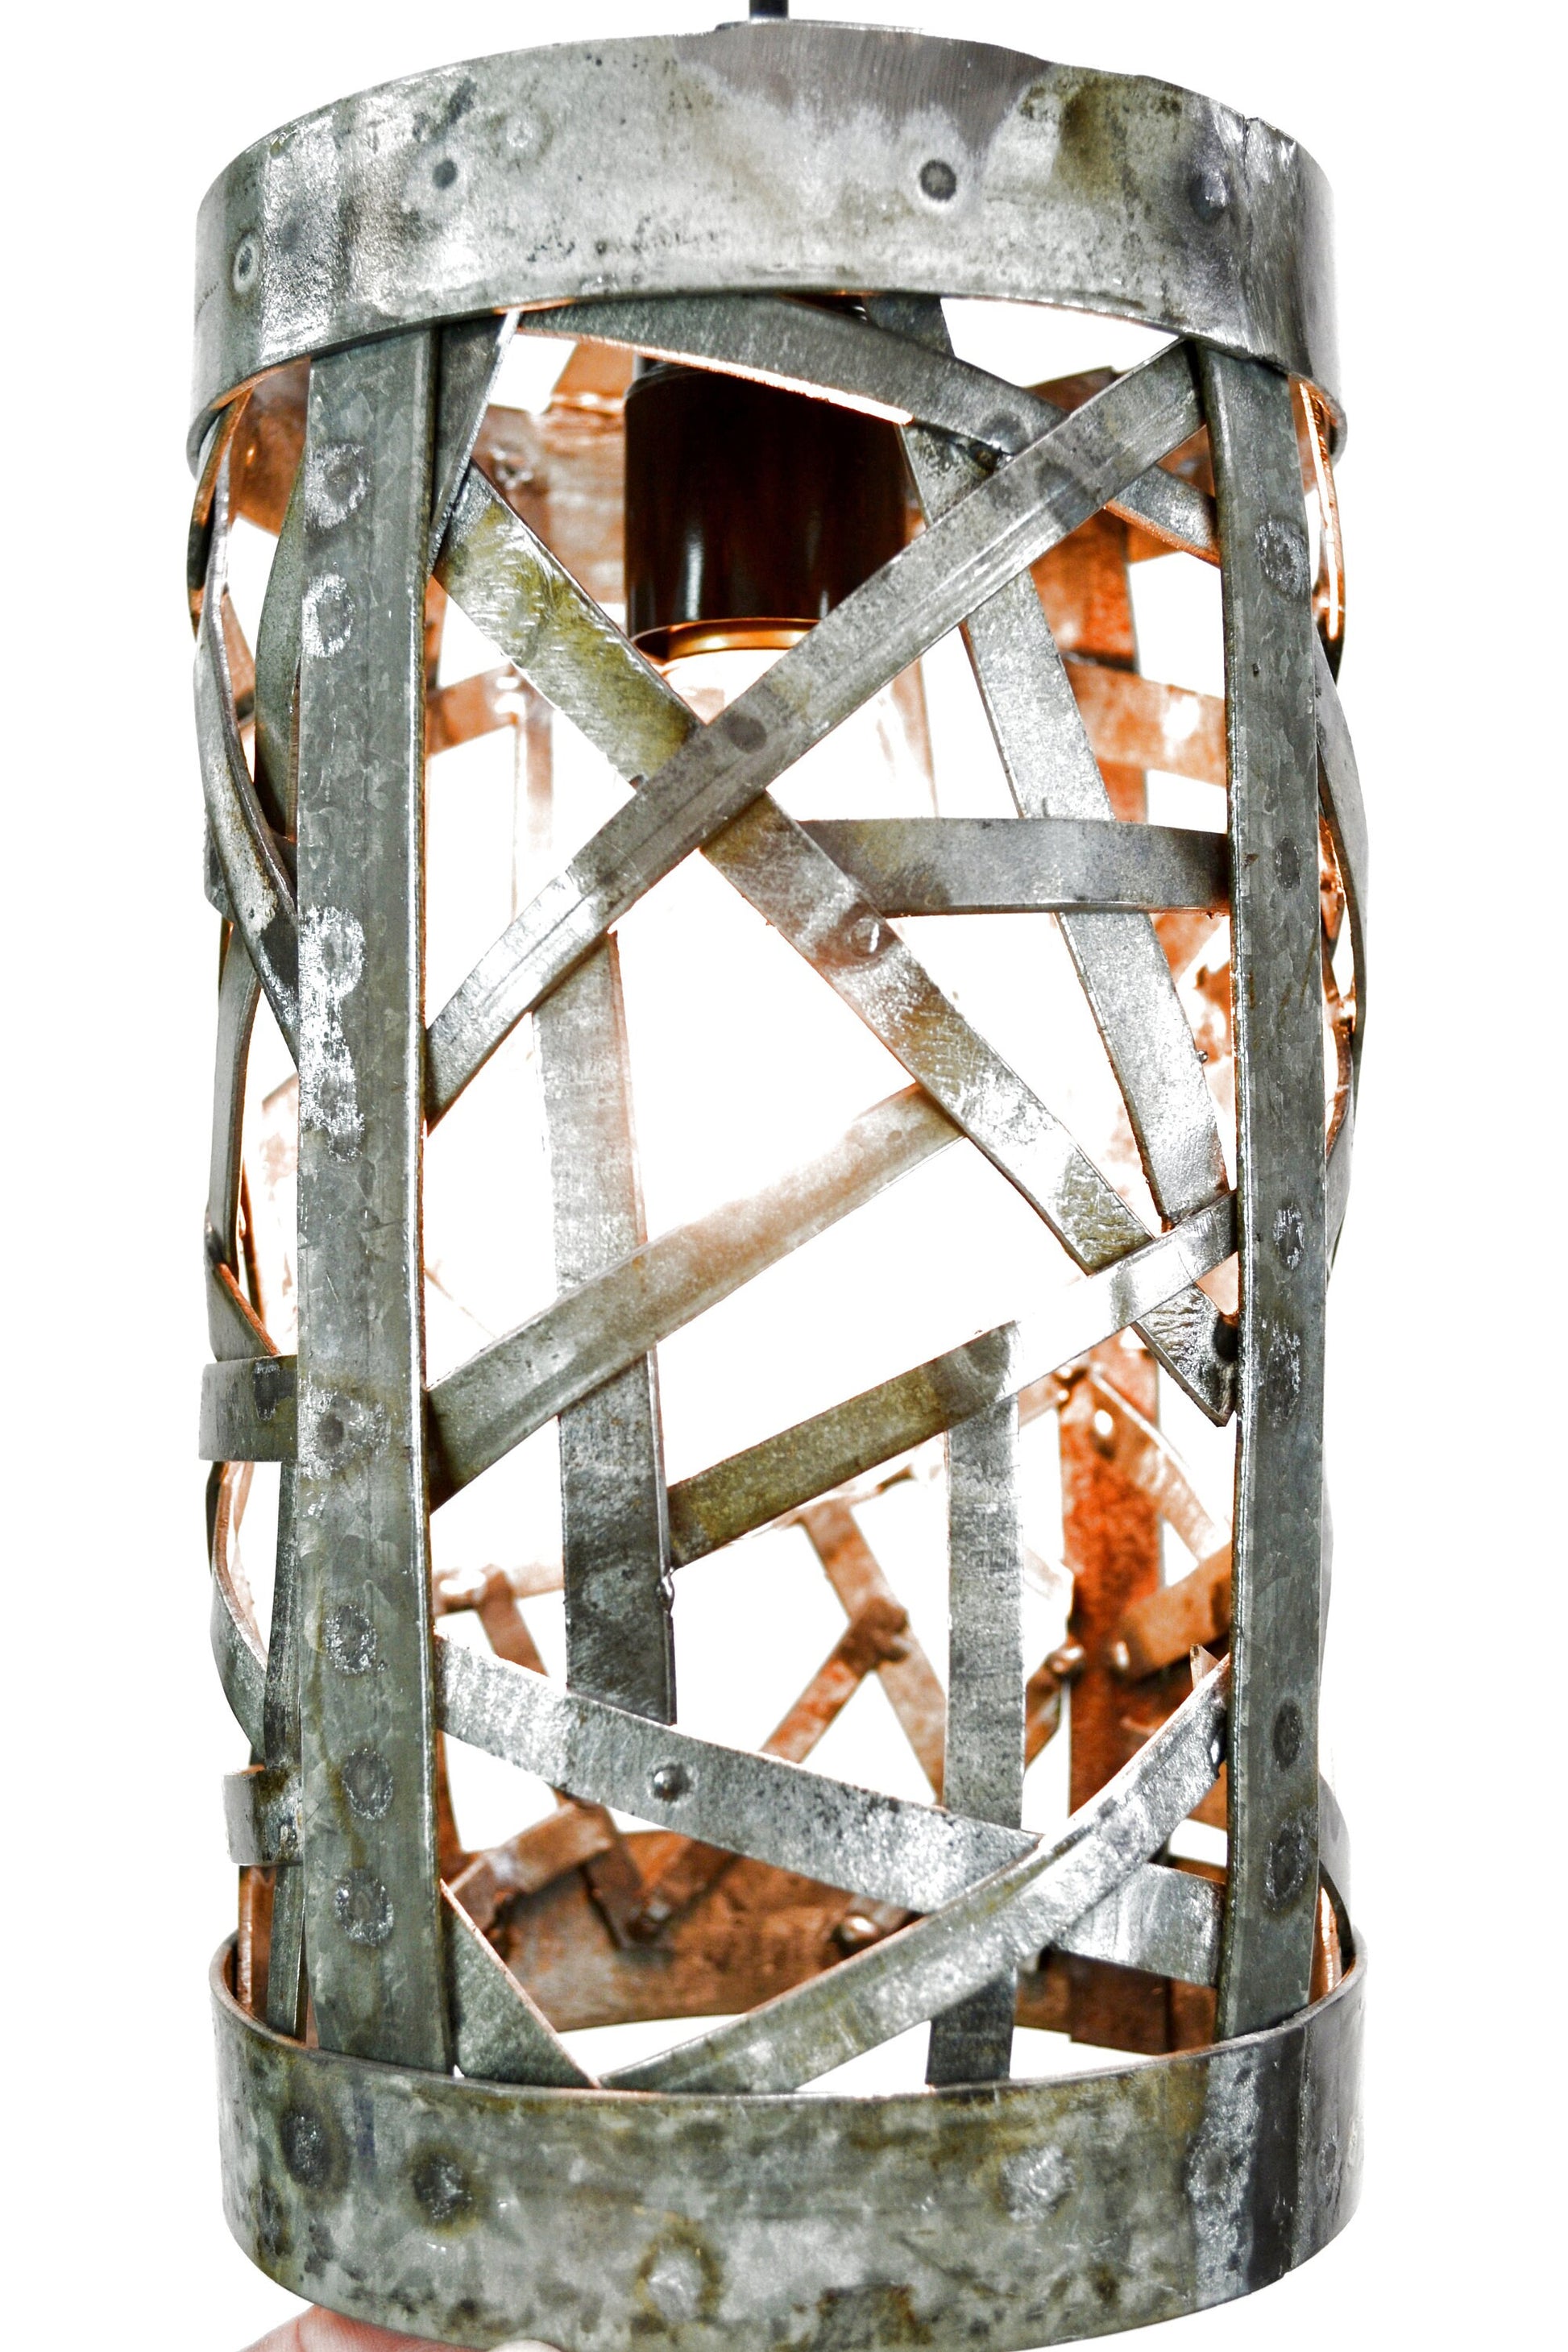 Wine Barrel Pendant Light - Valiina - Made from retired Napa wine barrel rings 100%. Recycled!